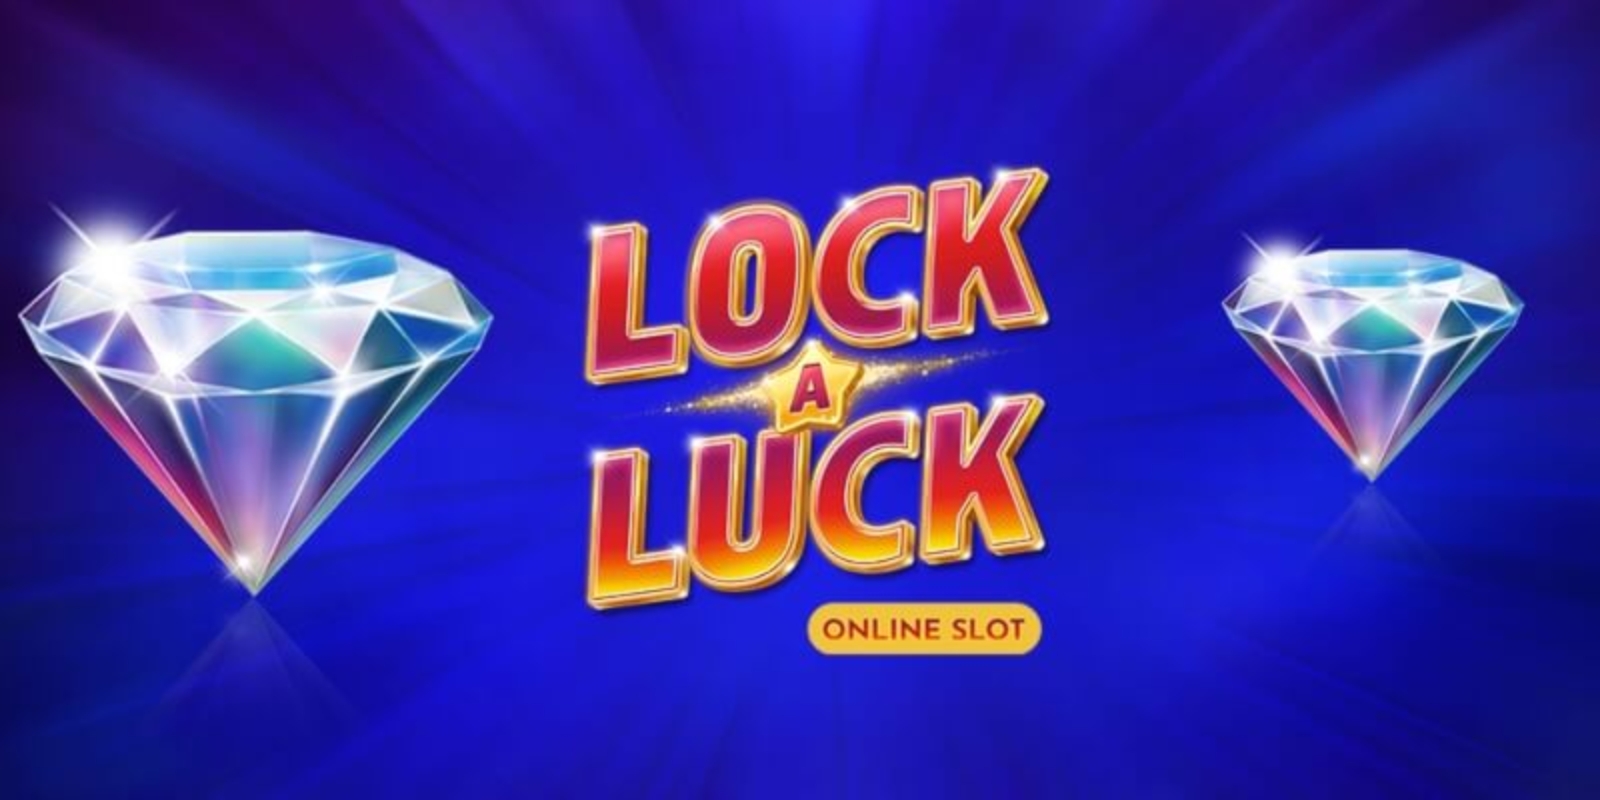 Lock A Luck demo